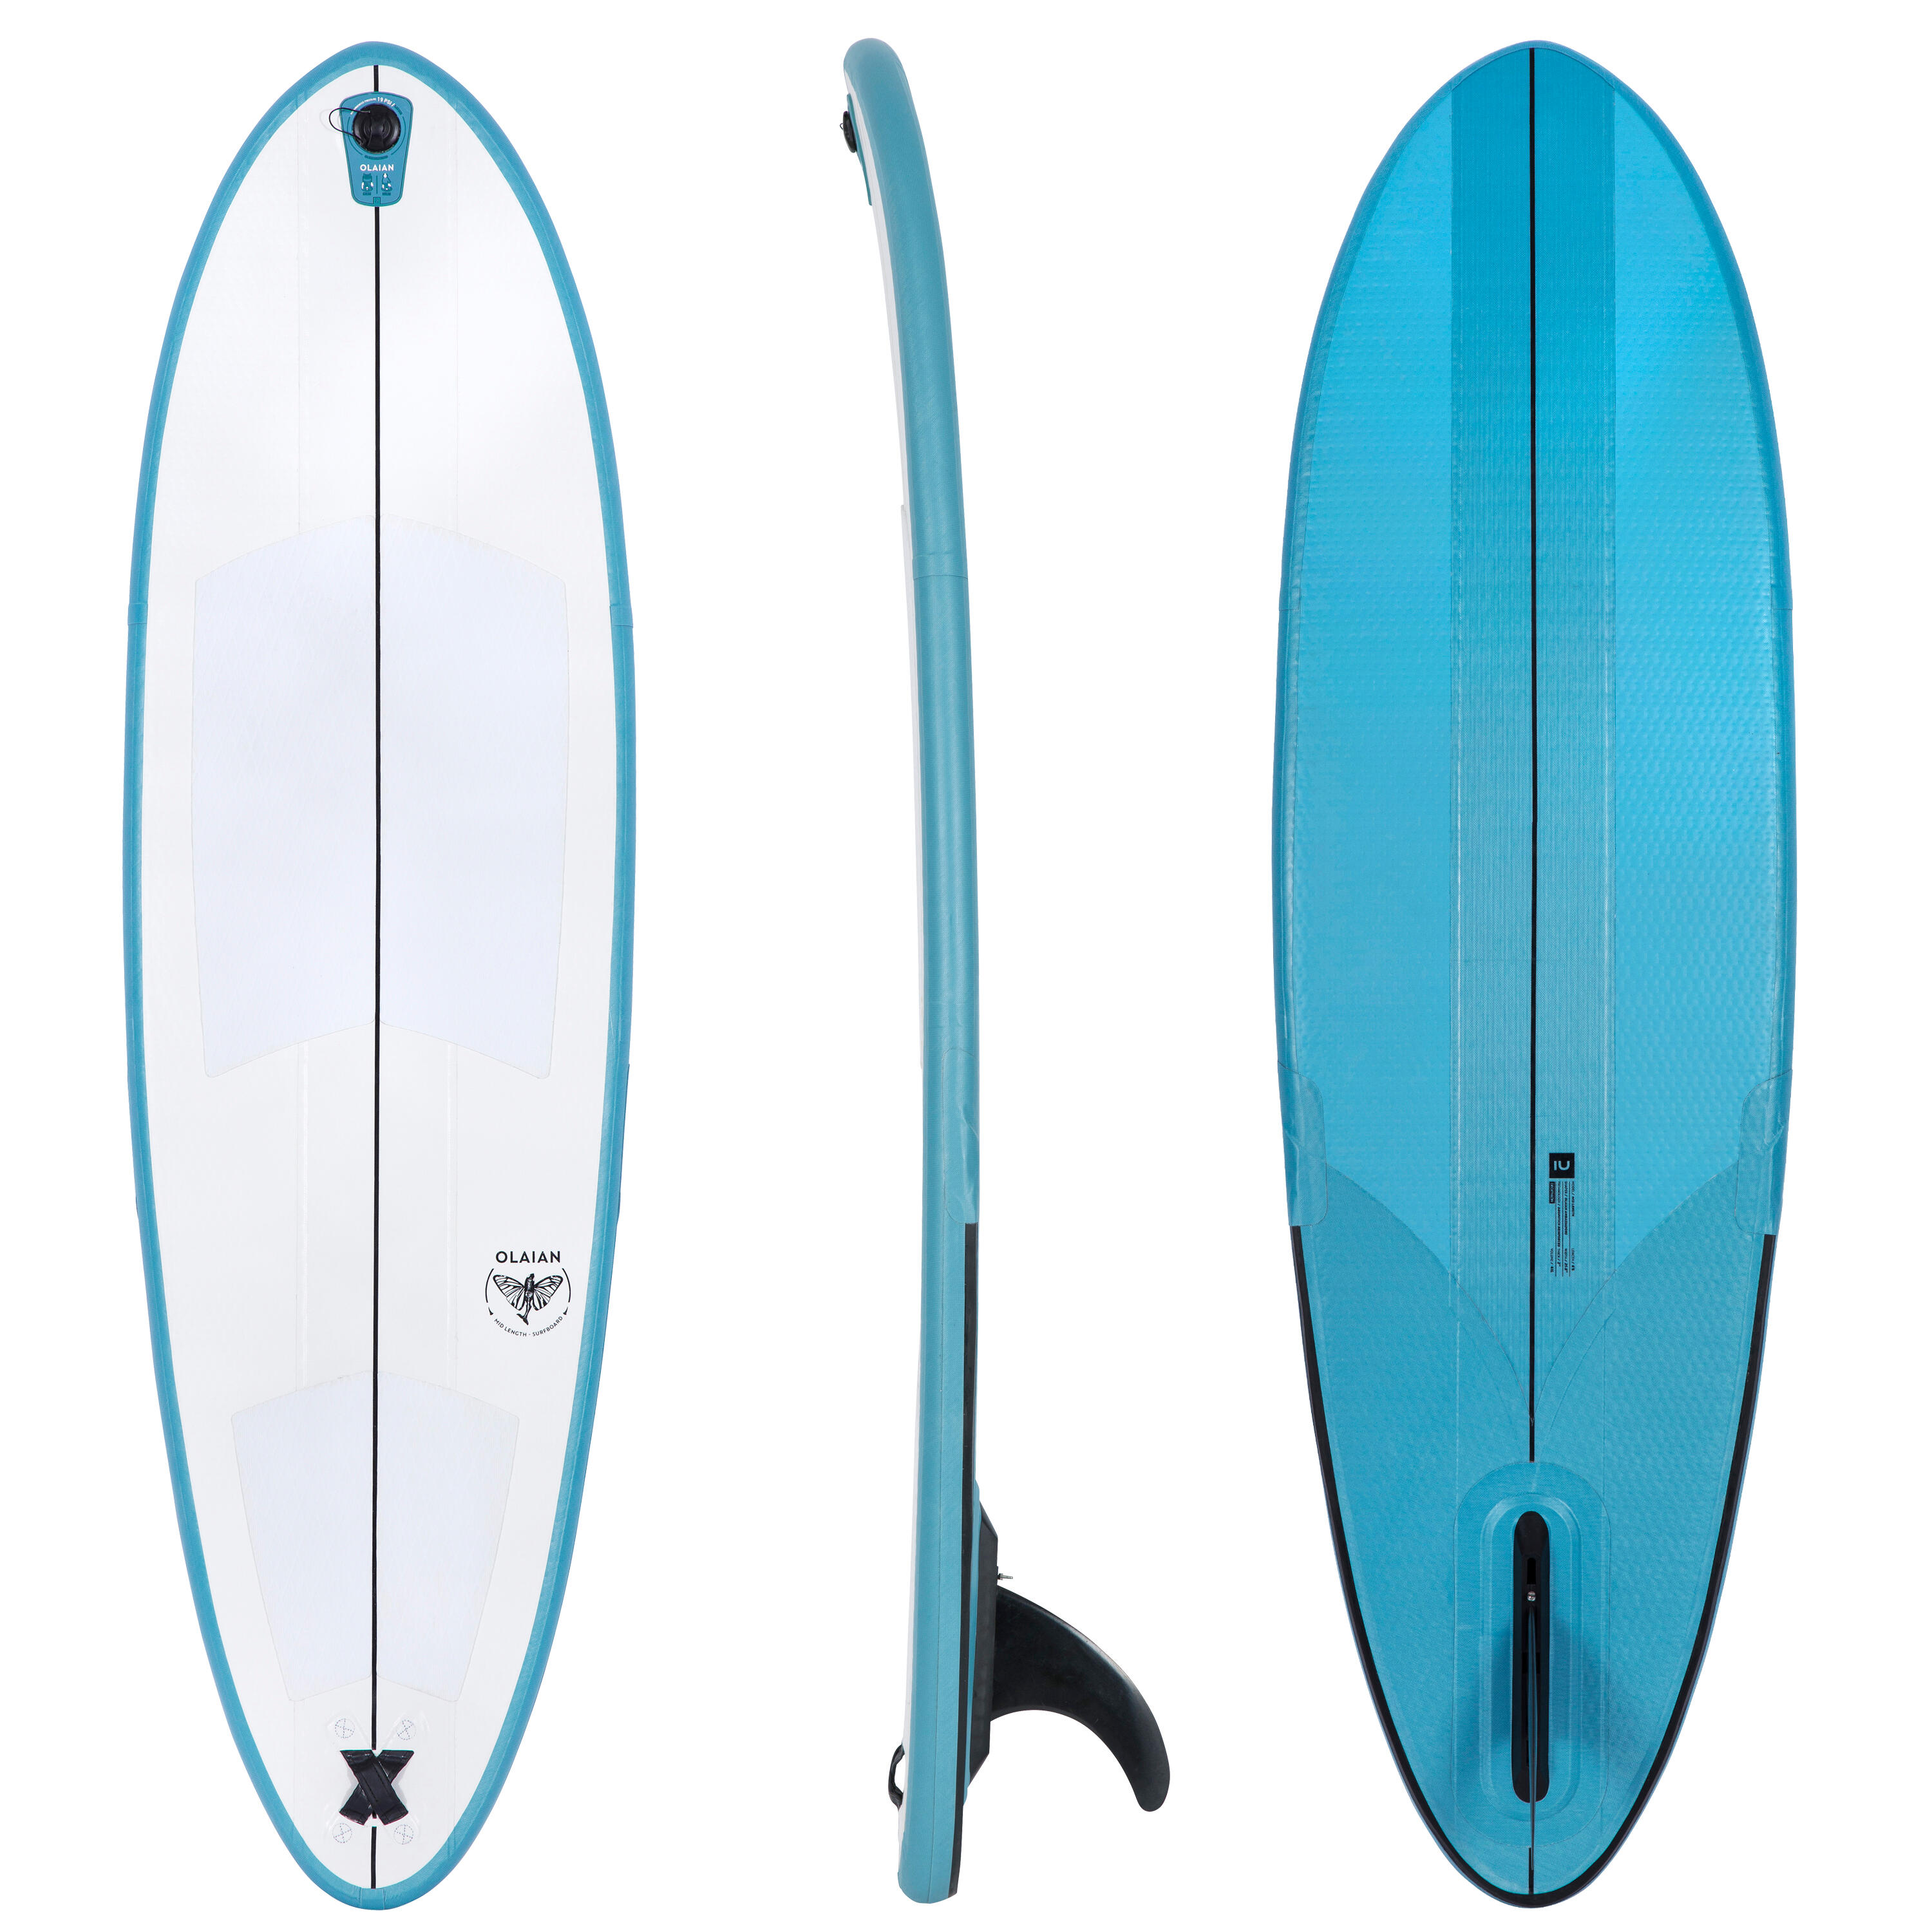 OLAIAN Surfboard 500 kompakt aufblasbar 6'6" (ohne Pumpe und Leash)